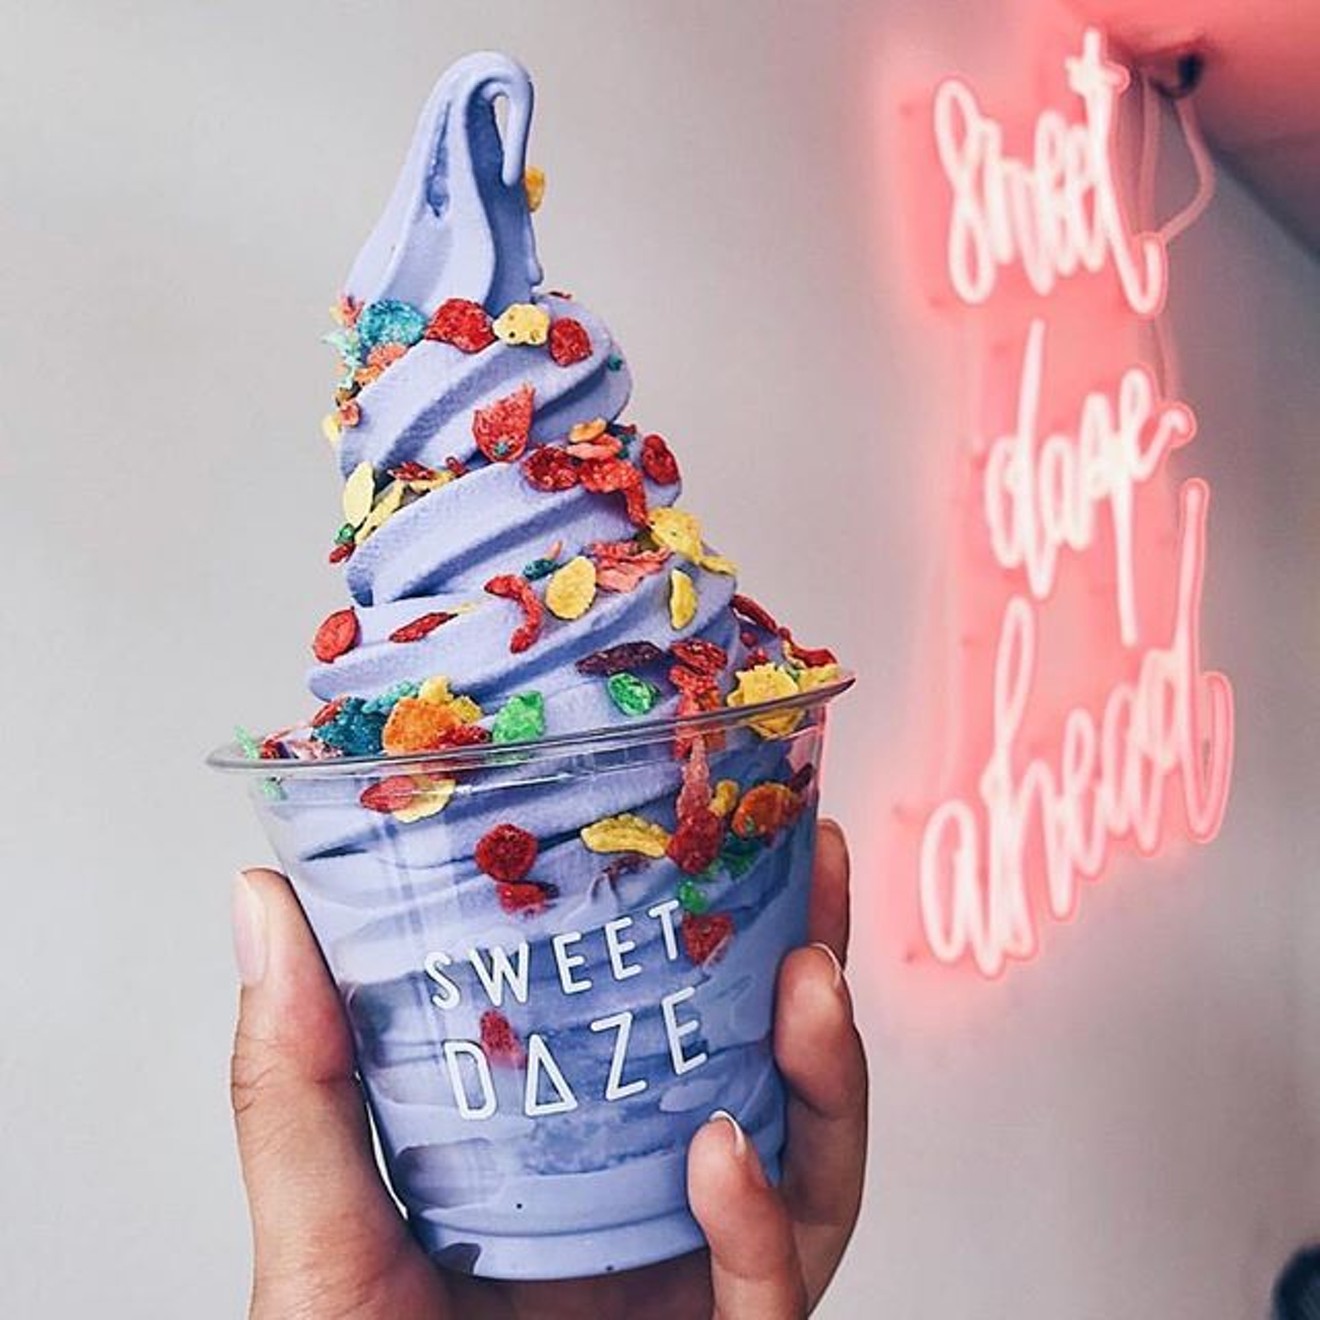 Sweet Daze's ube (purple yam) ice cream is an Instagram fave.